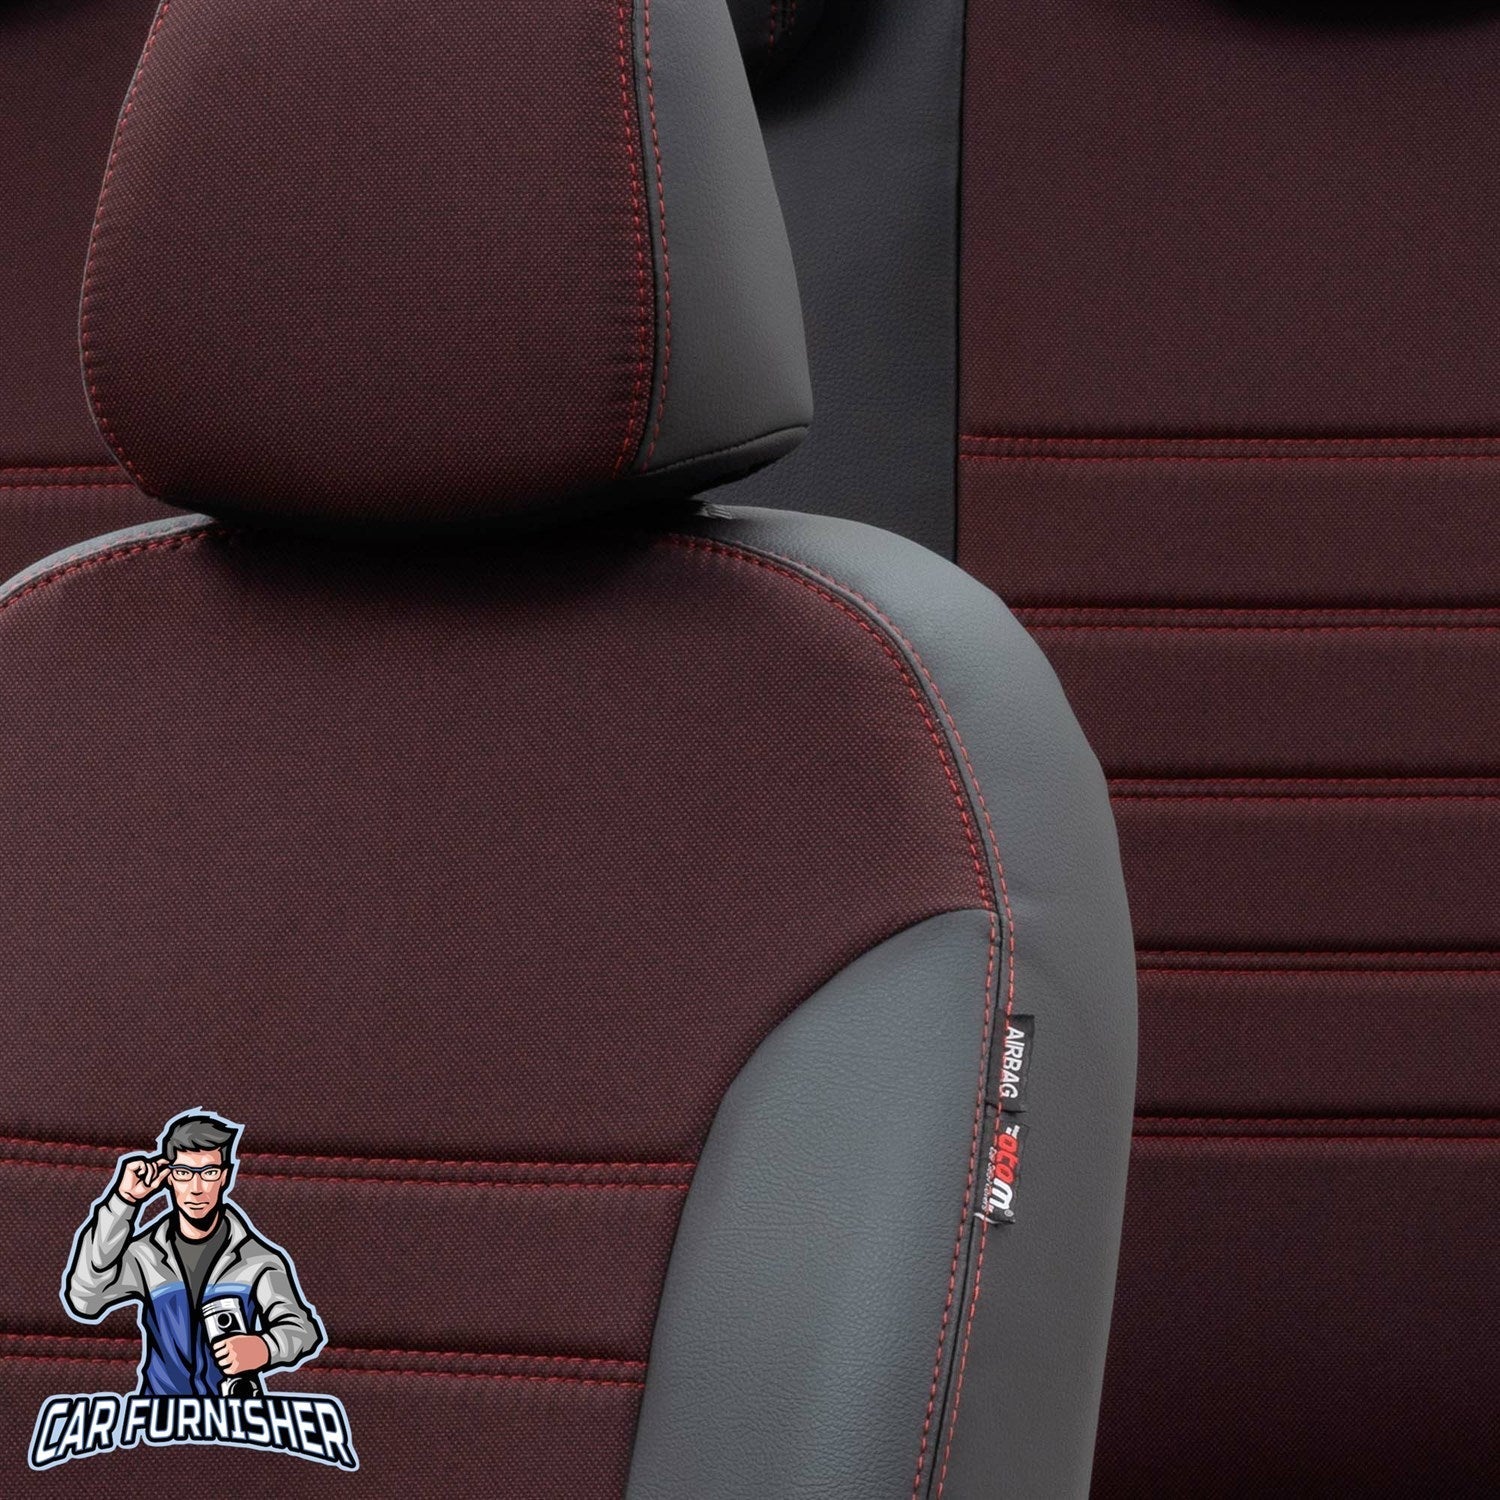 Fiat Brava Seat Covers Paris Leather & Jacquard Design Red Leather & Jacquard Fabric